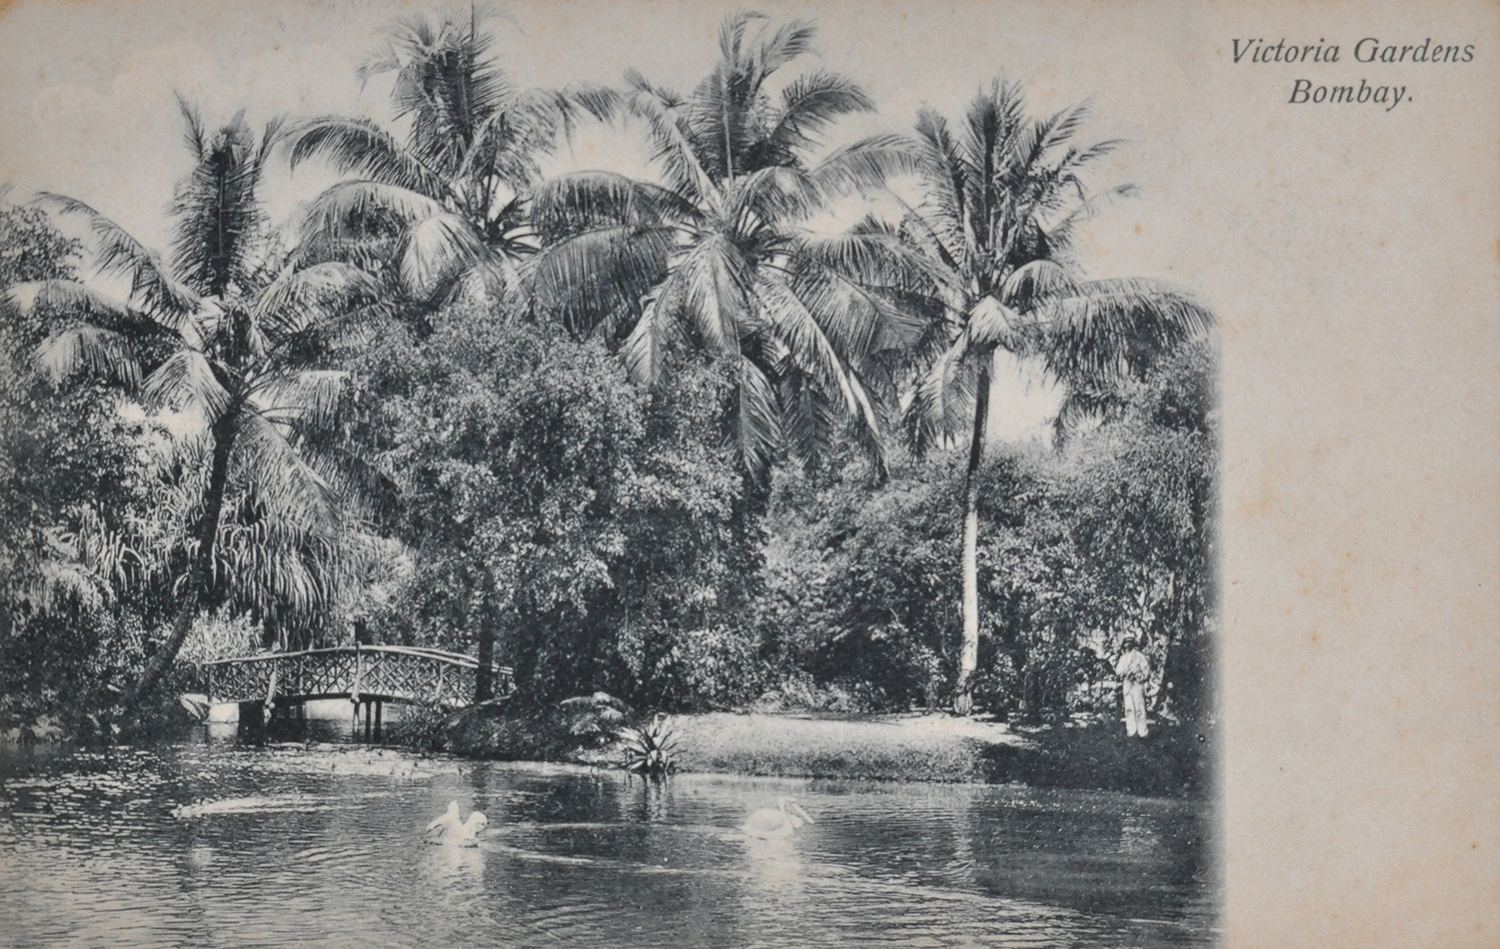 Victoria Gardens In Bombay – Old Postcard 1890